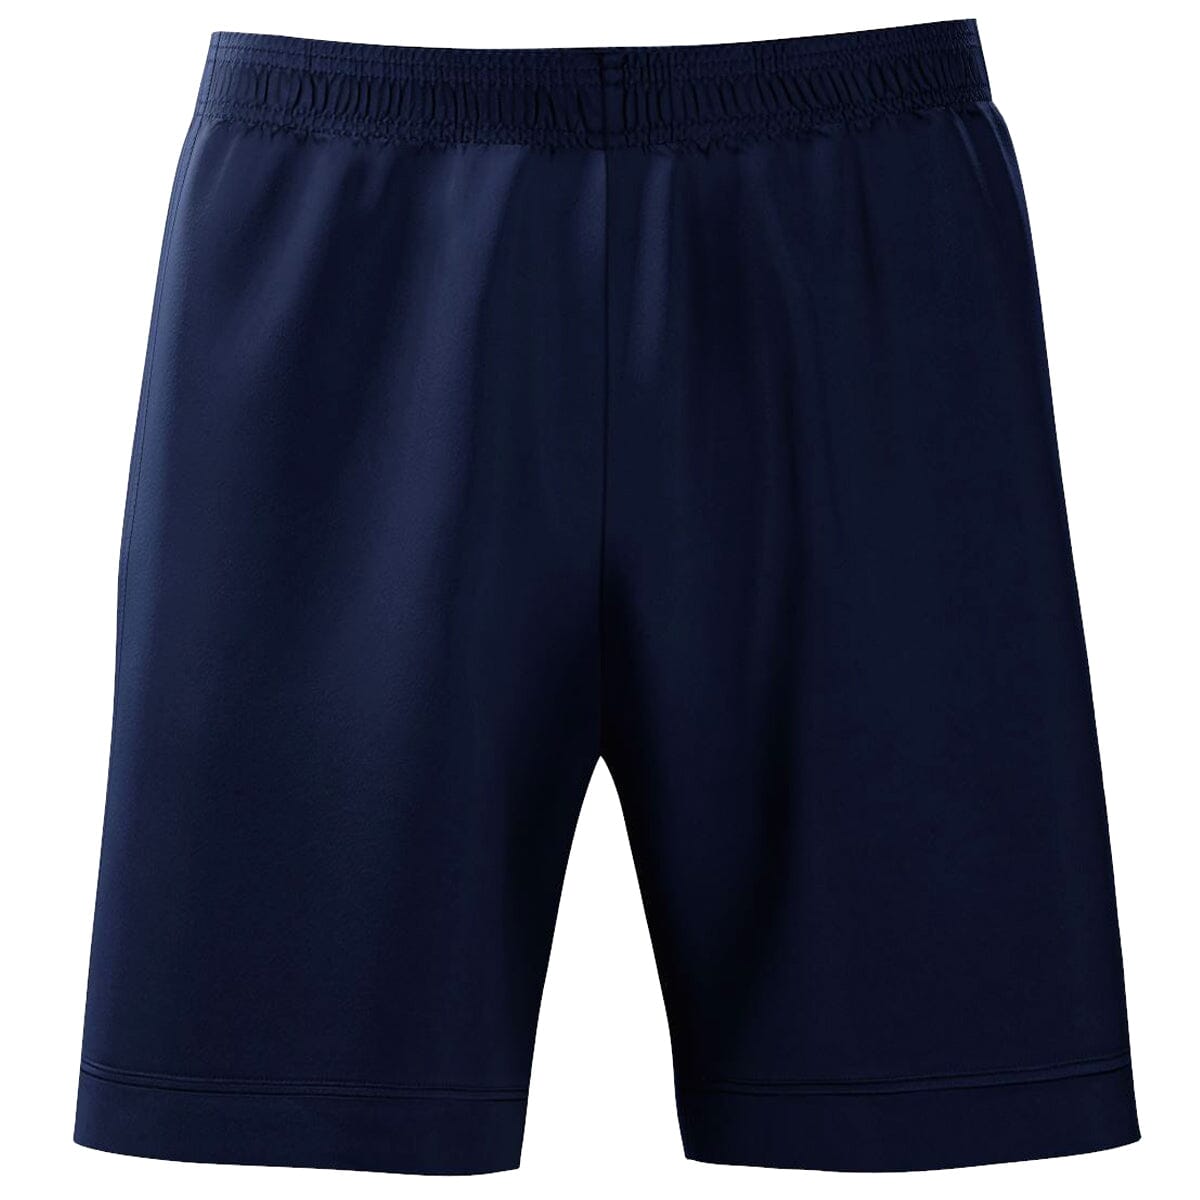 adidas miSquadra 17 Men's Custom Shorts Apparel Adidas Adult Small Navy 